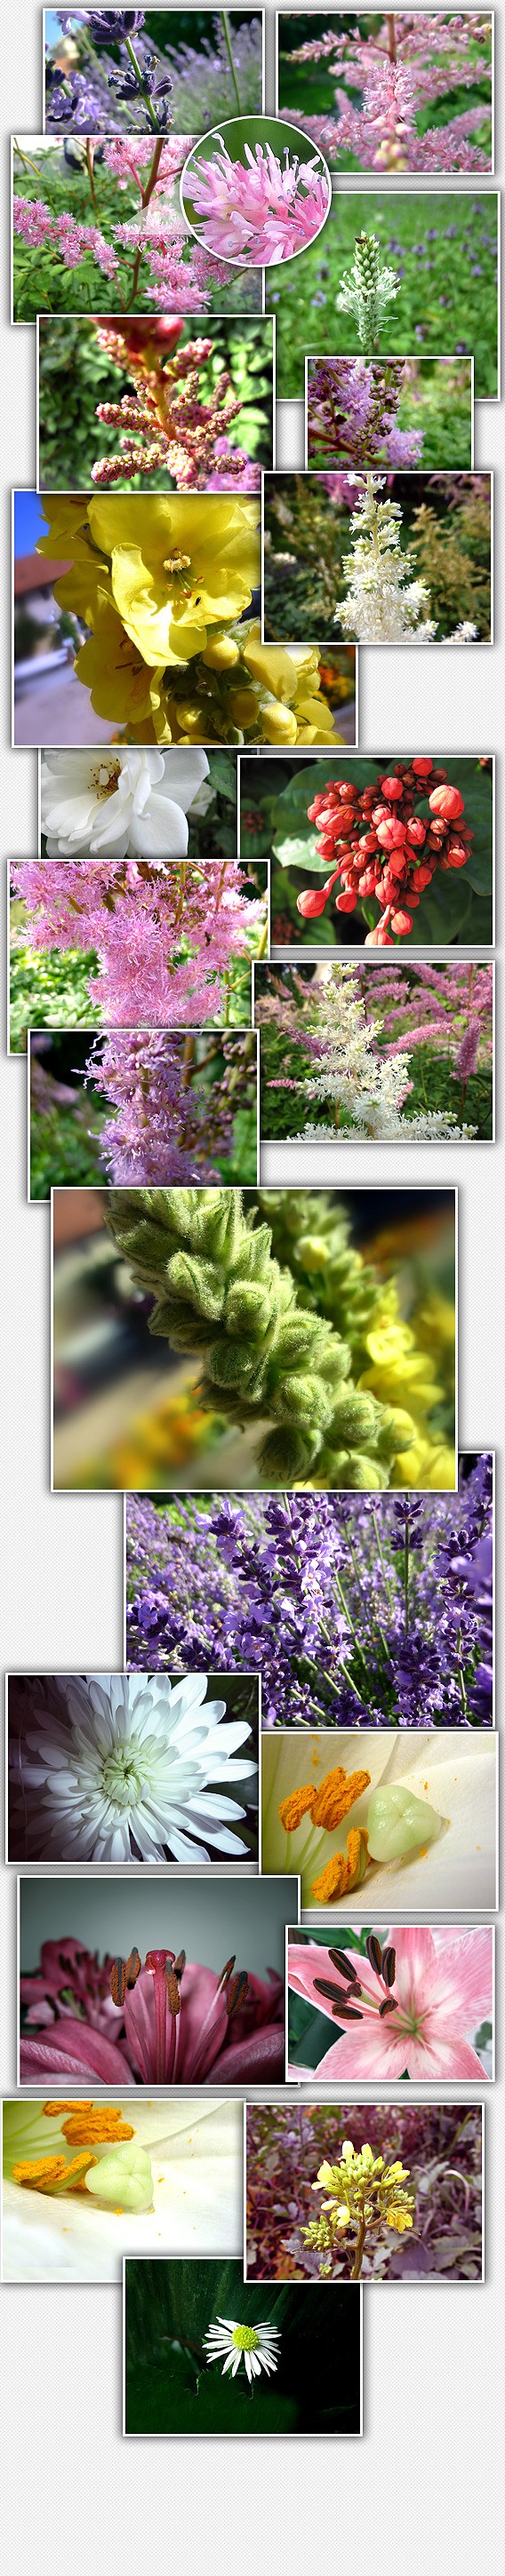 Download 23 High Resolution Professional Flower Stock Photos - Blog Lorelei Web Design